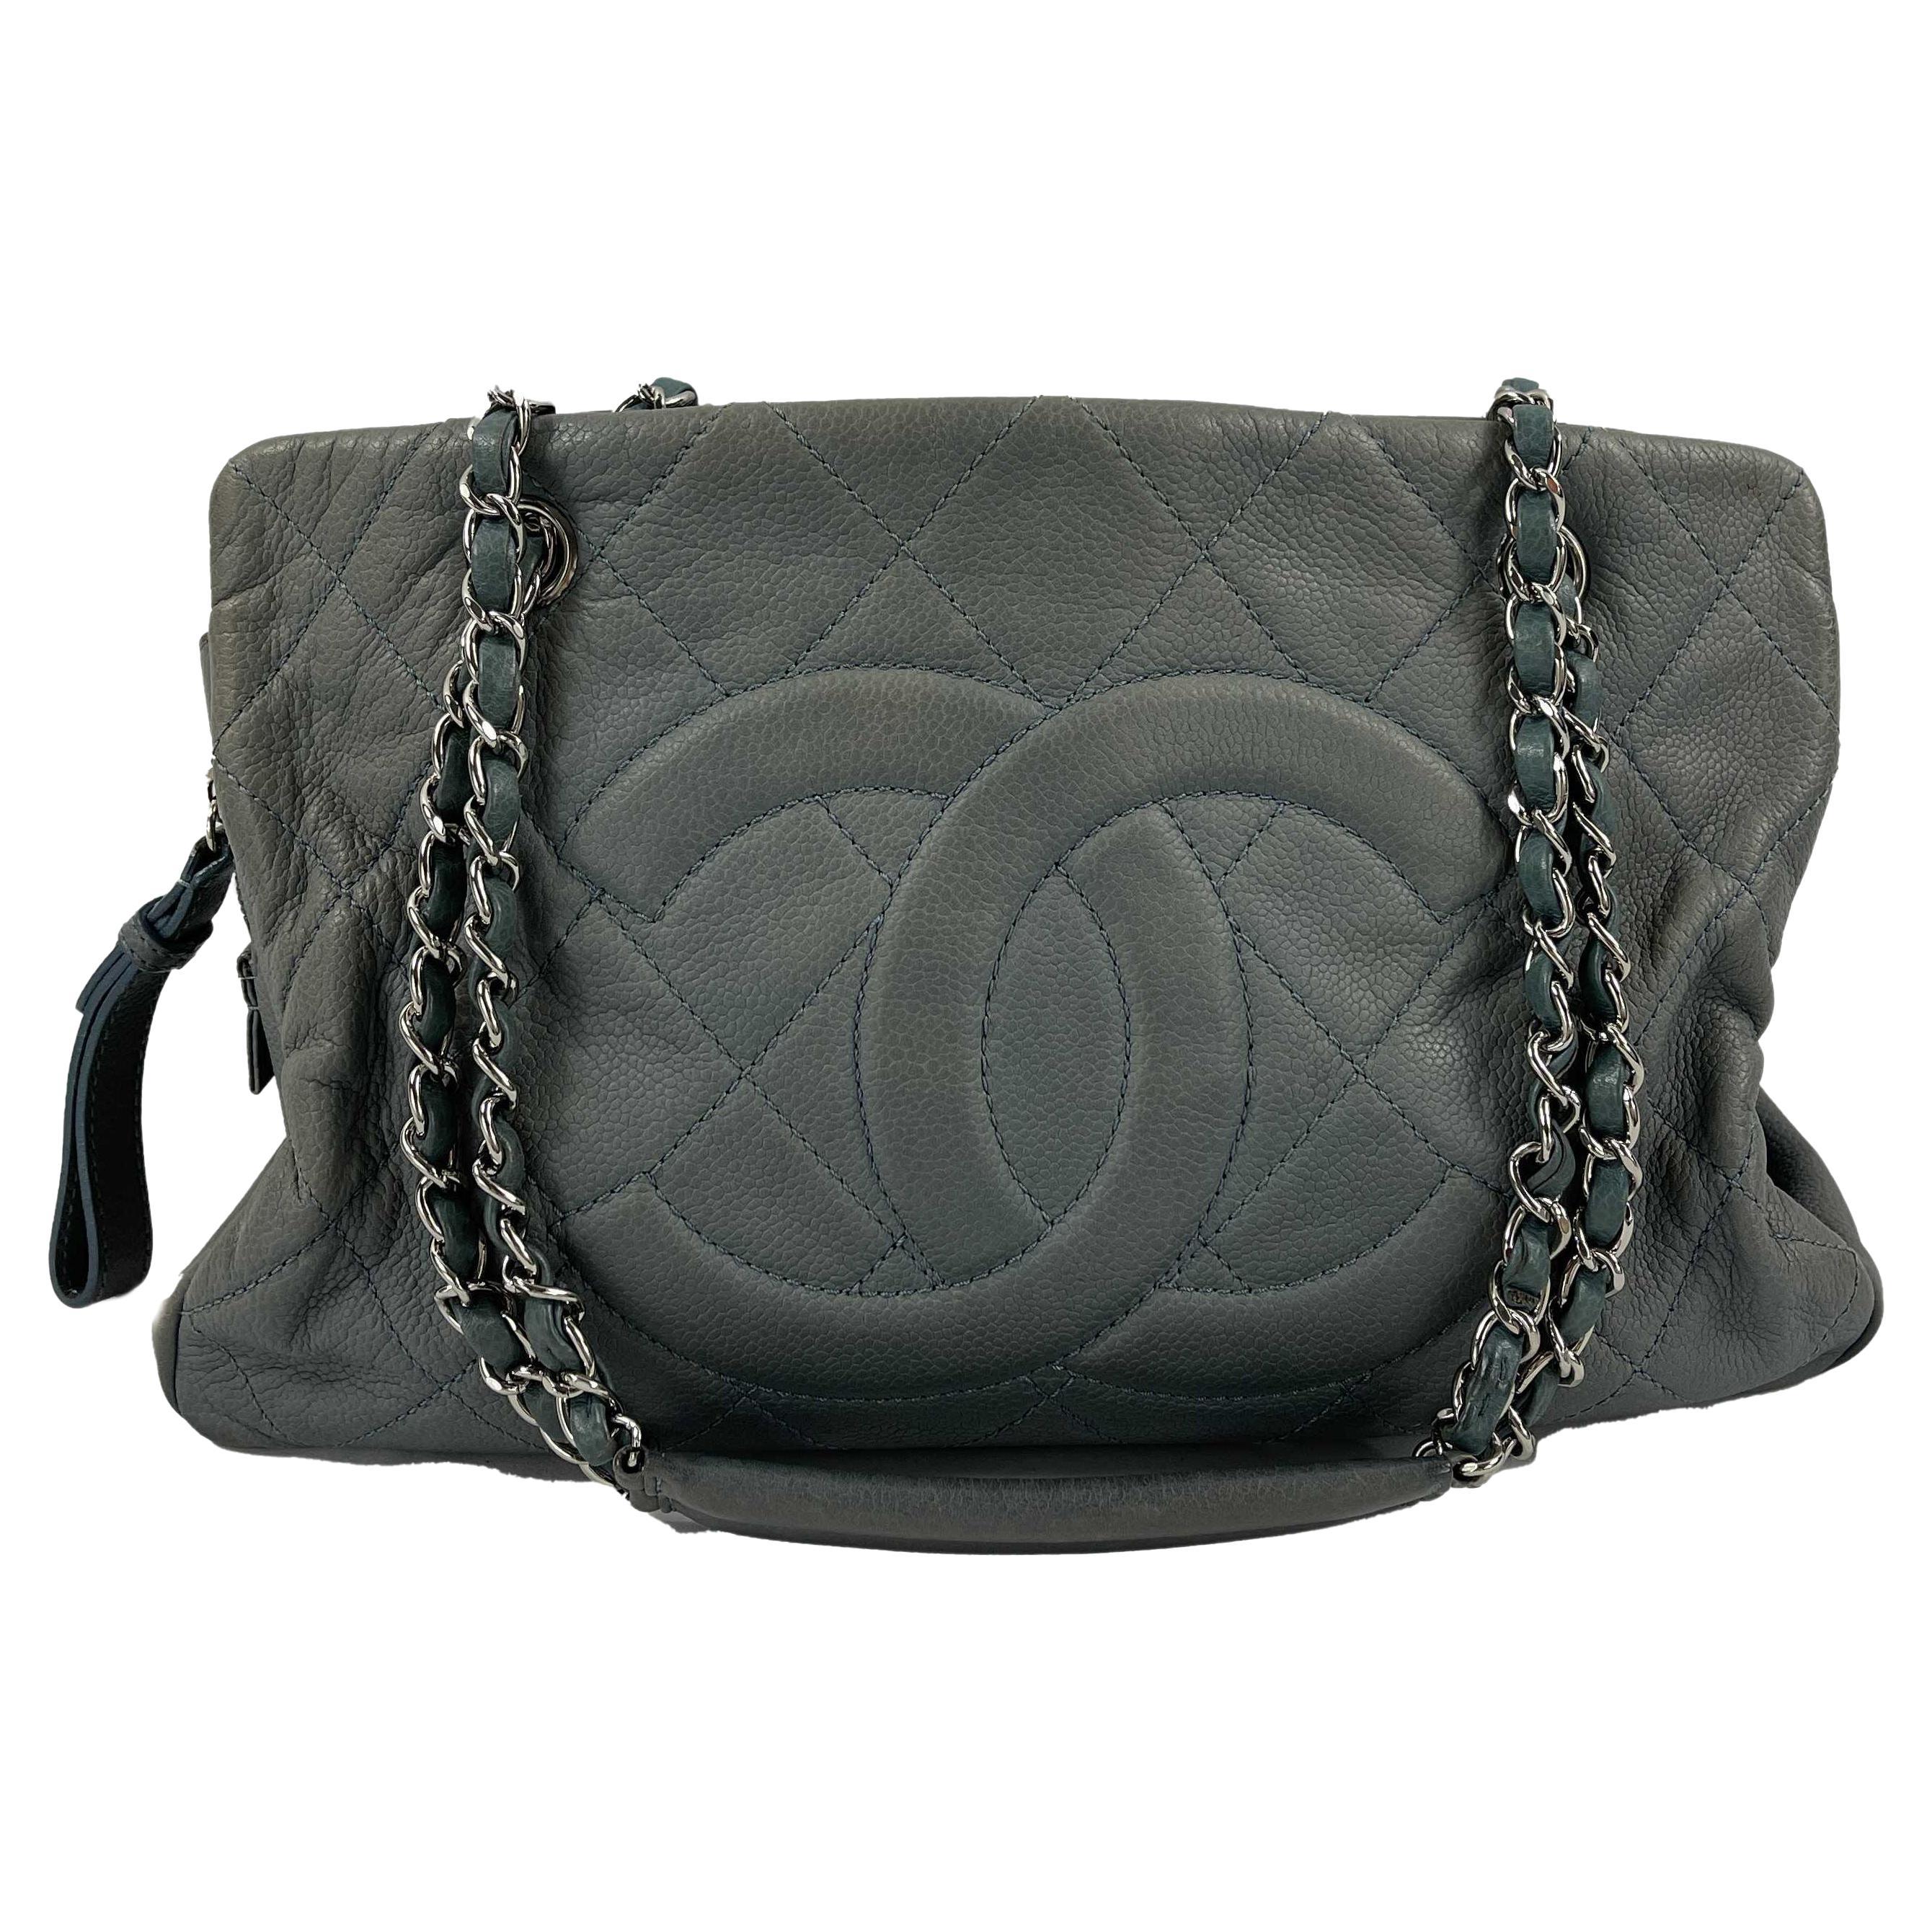 CHANEL  Seafoam / Silver CC Caviar Medium Leather Shopping Tote / Shoulder Bag